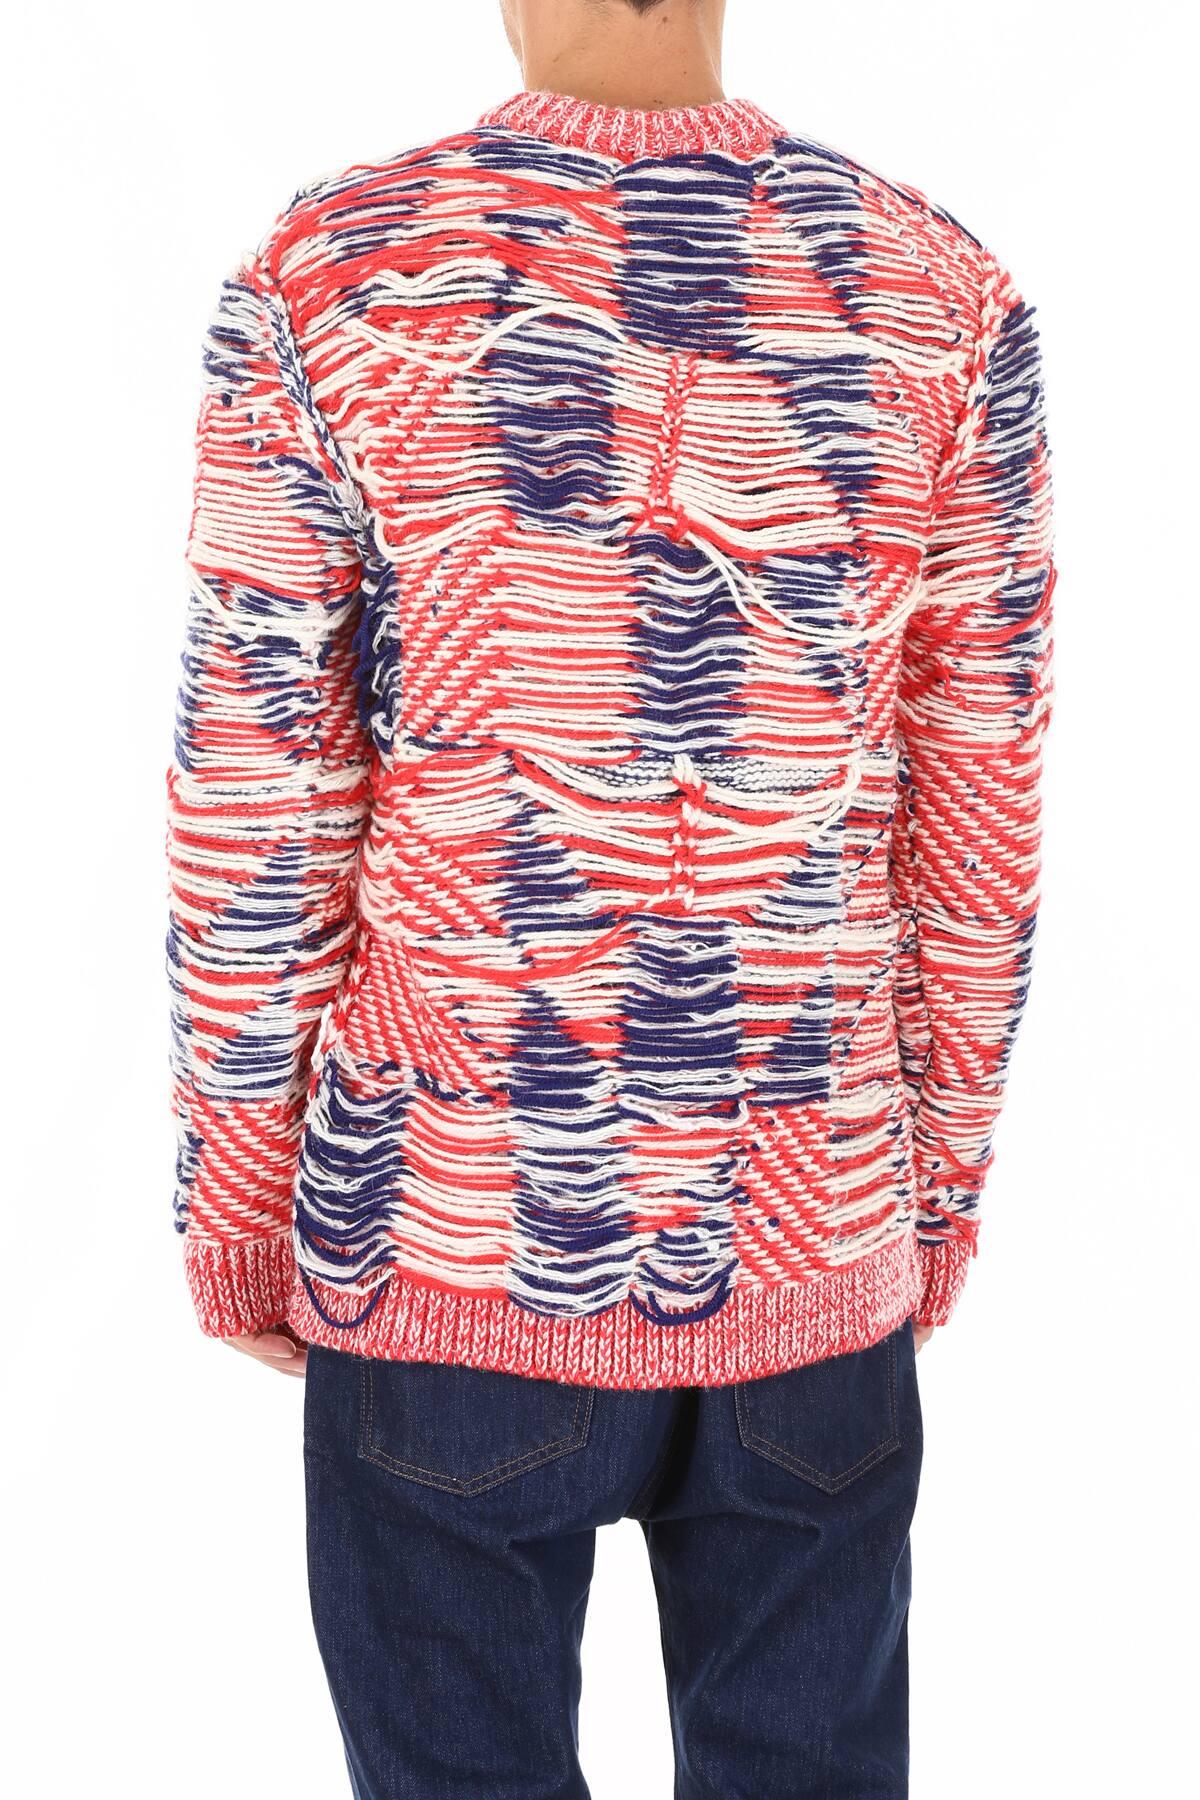 Calvin Klein American Flag Jacket Flash Sales, 50% OFF |  www.lebienvieillir.com